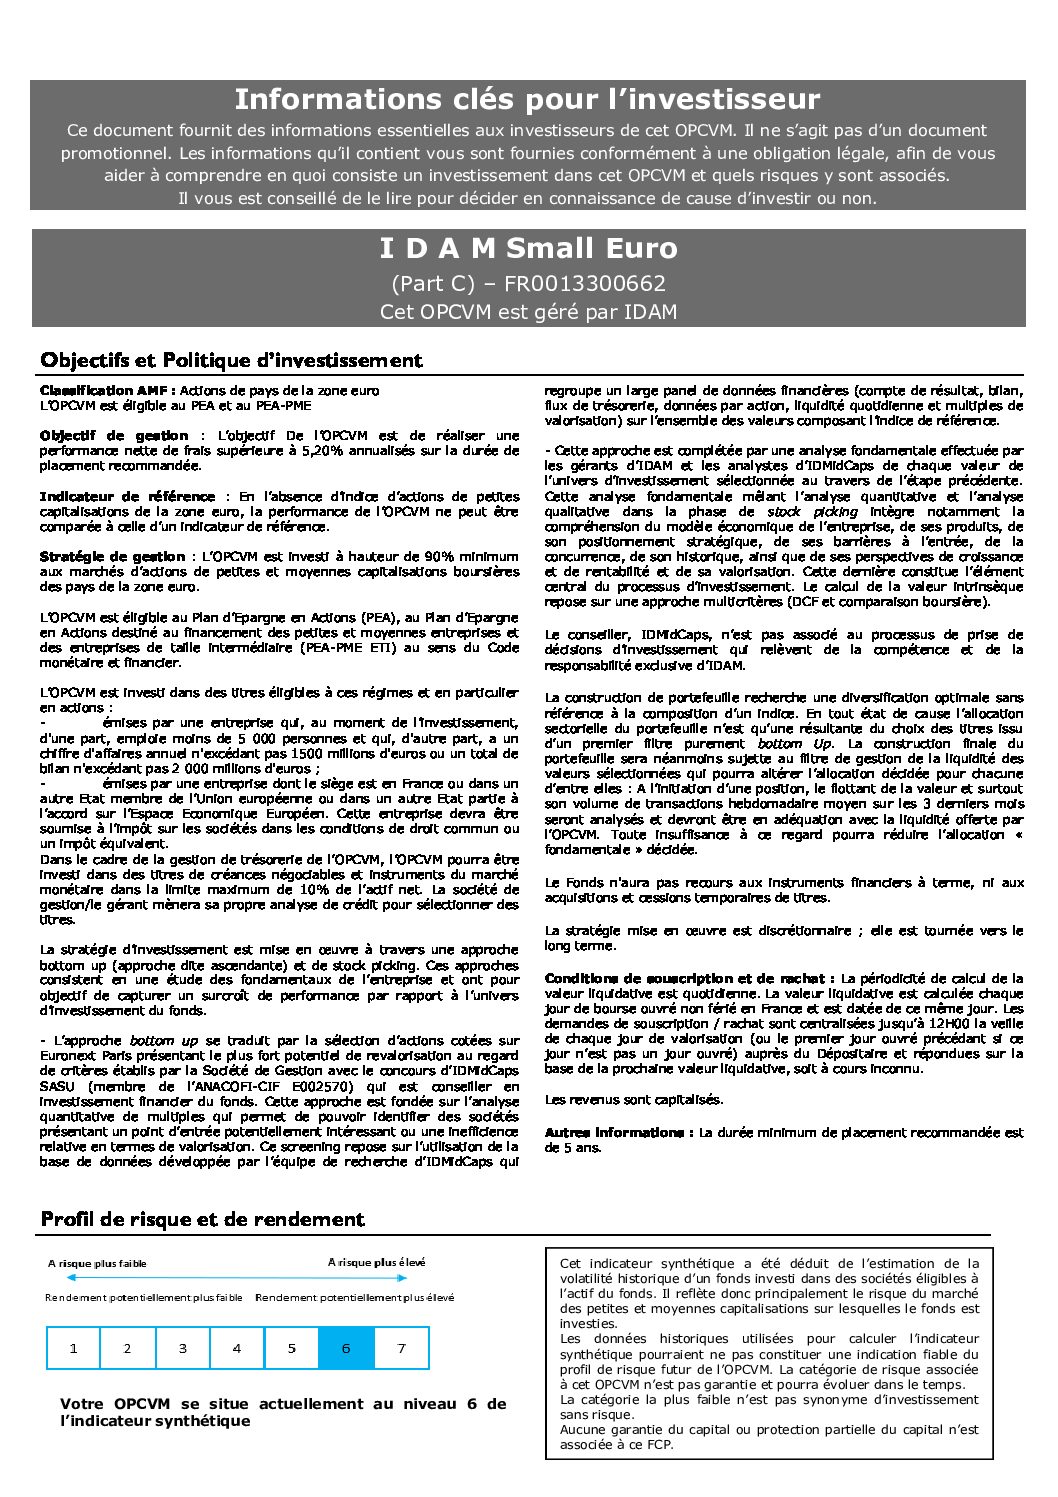 DICI-Part-C-IDAM-SMALL-EURO-1-pdf